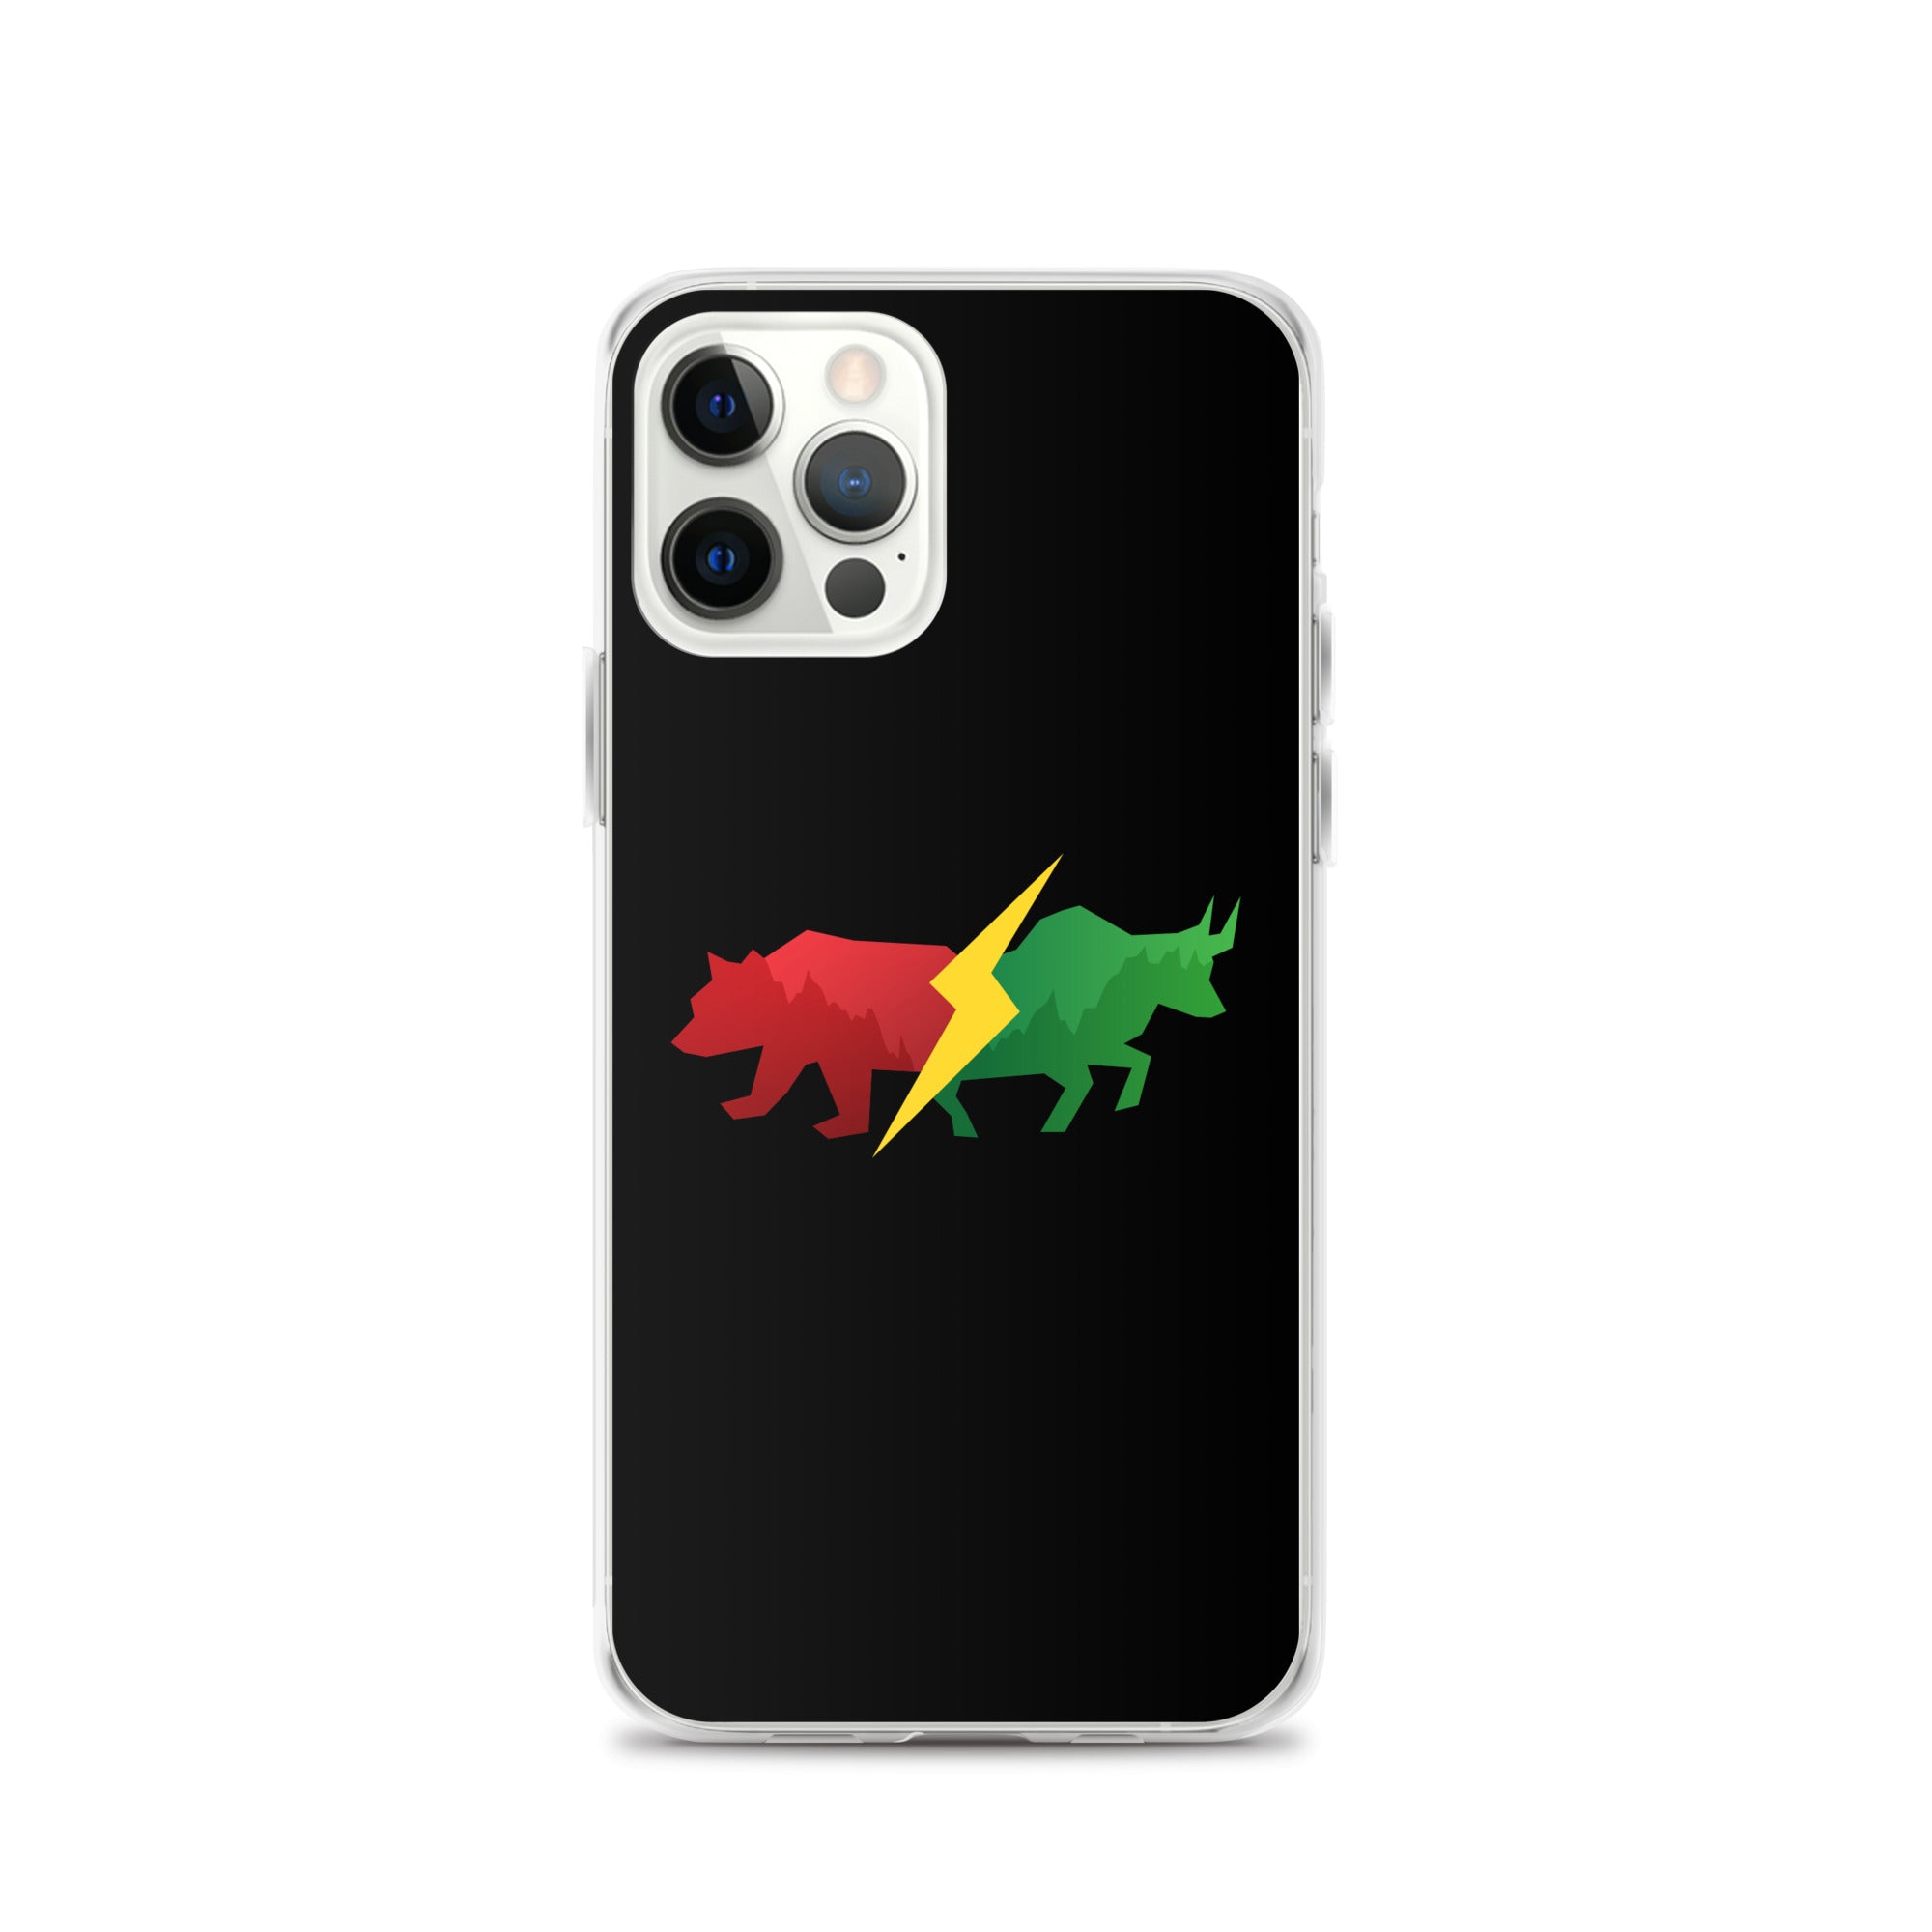 iPhone Case - Bear & Bull